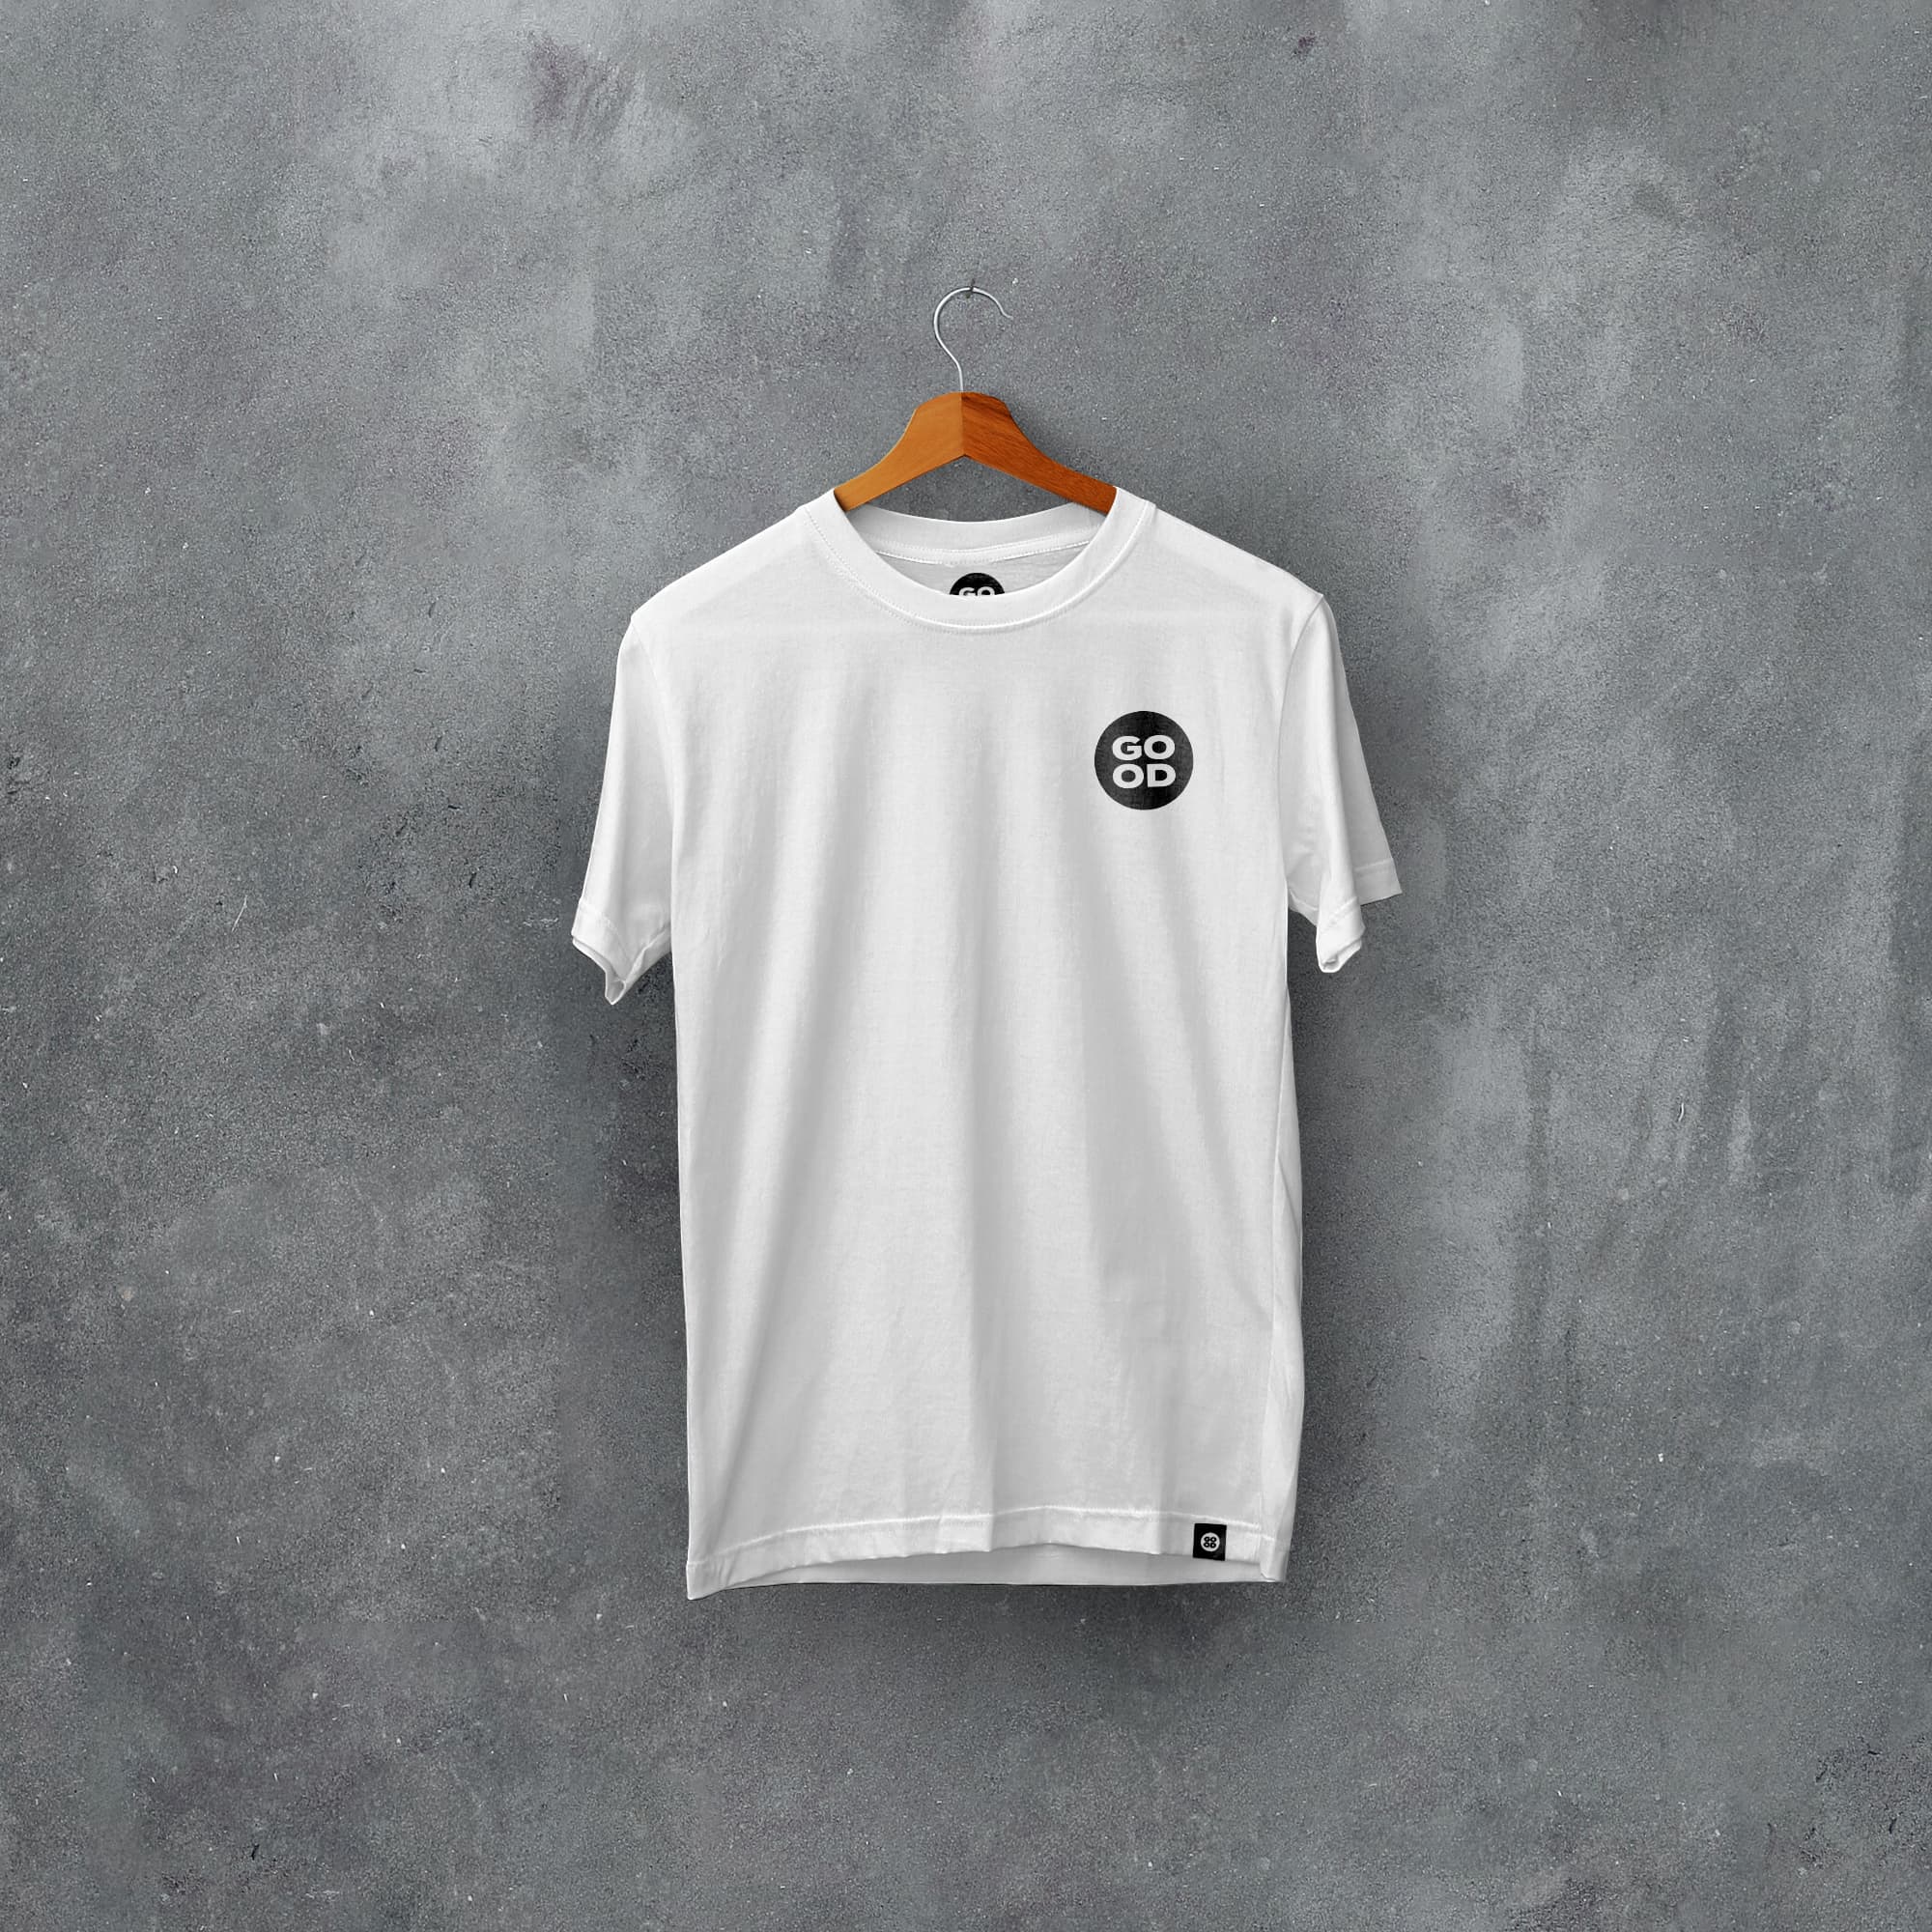 Bristol City Classic Kits Football T-Shirt